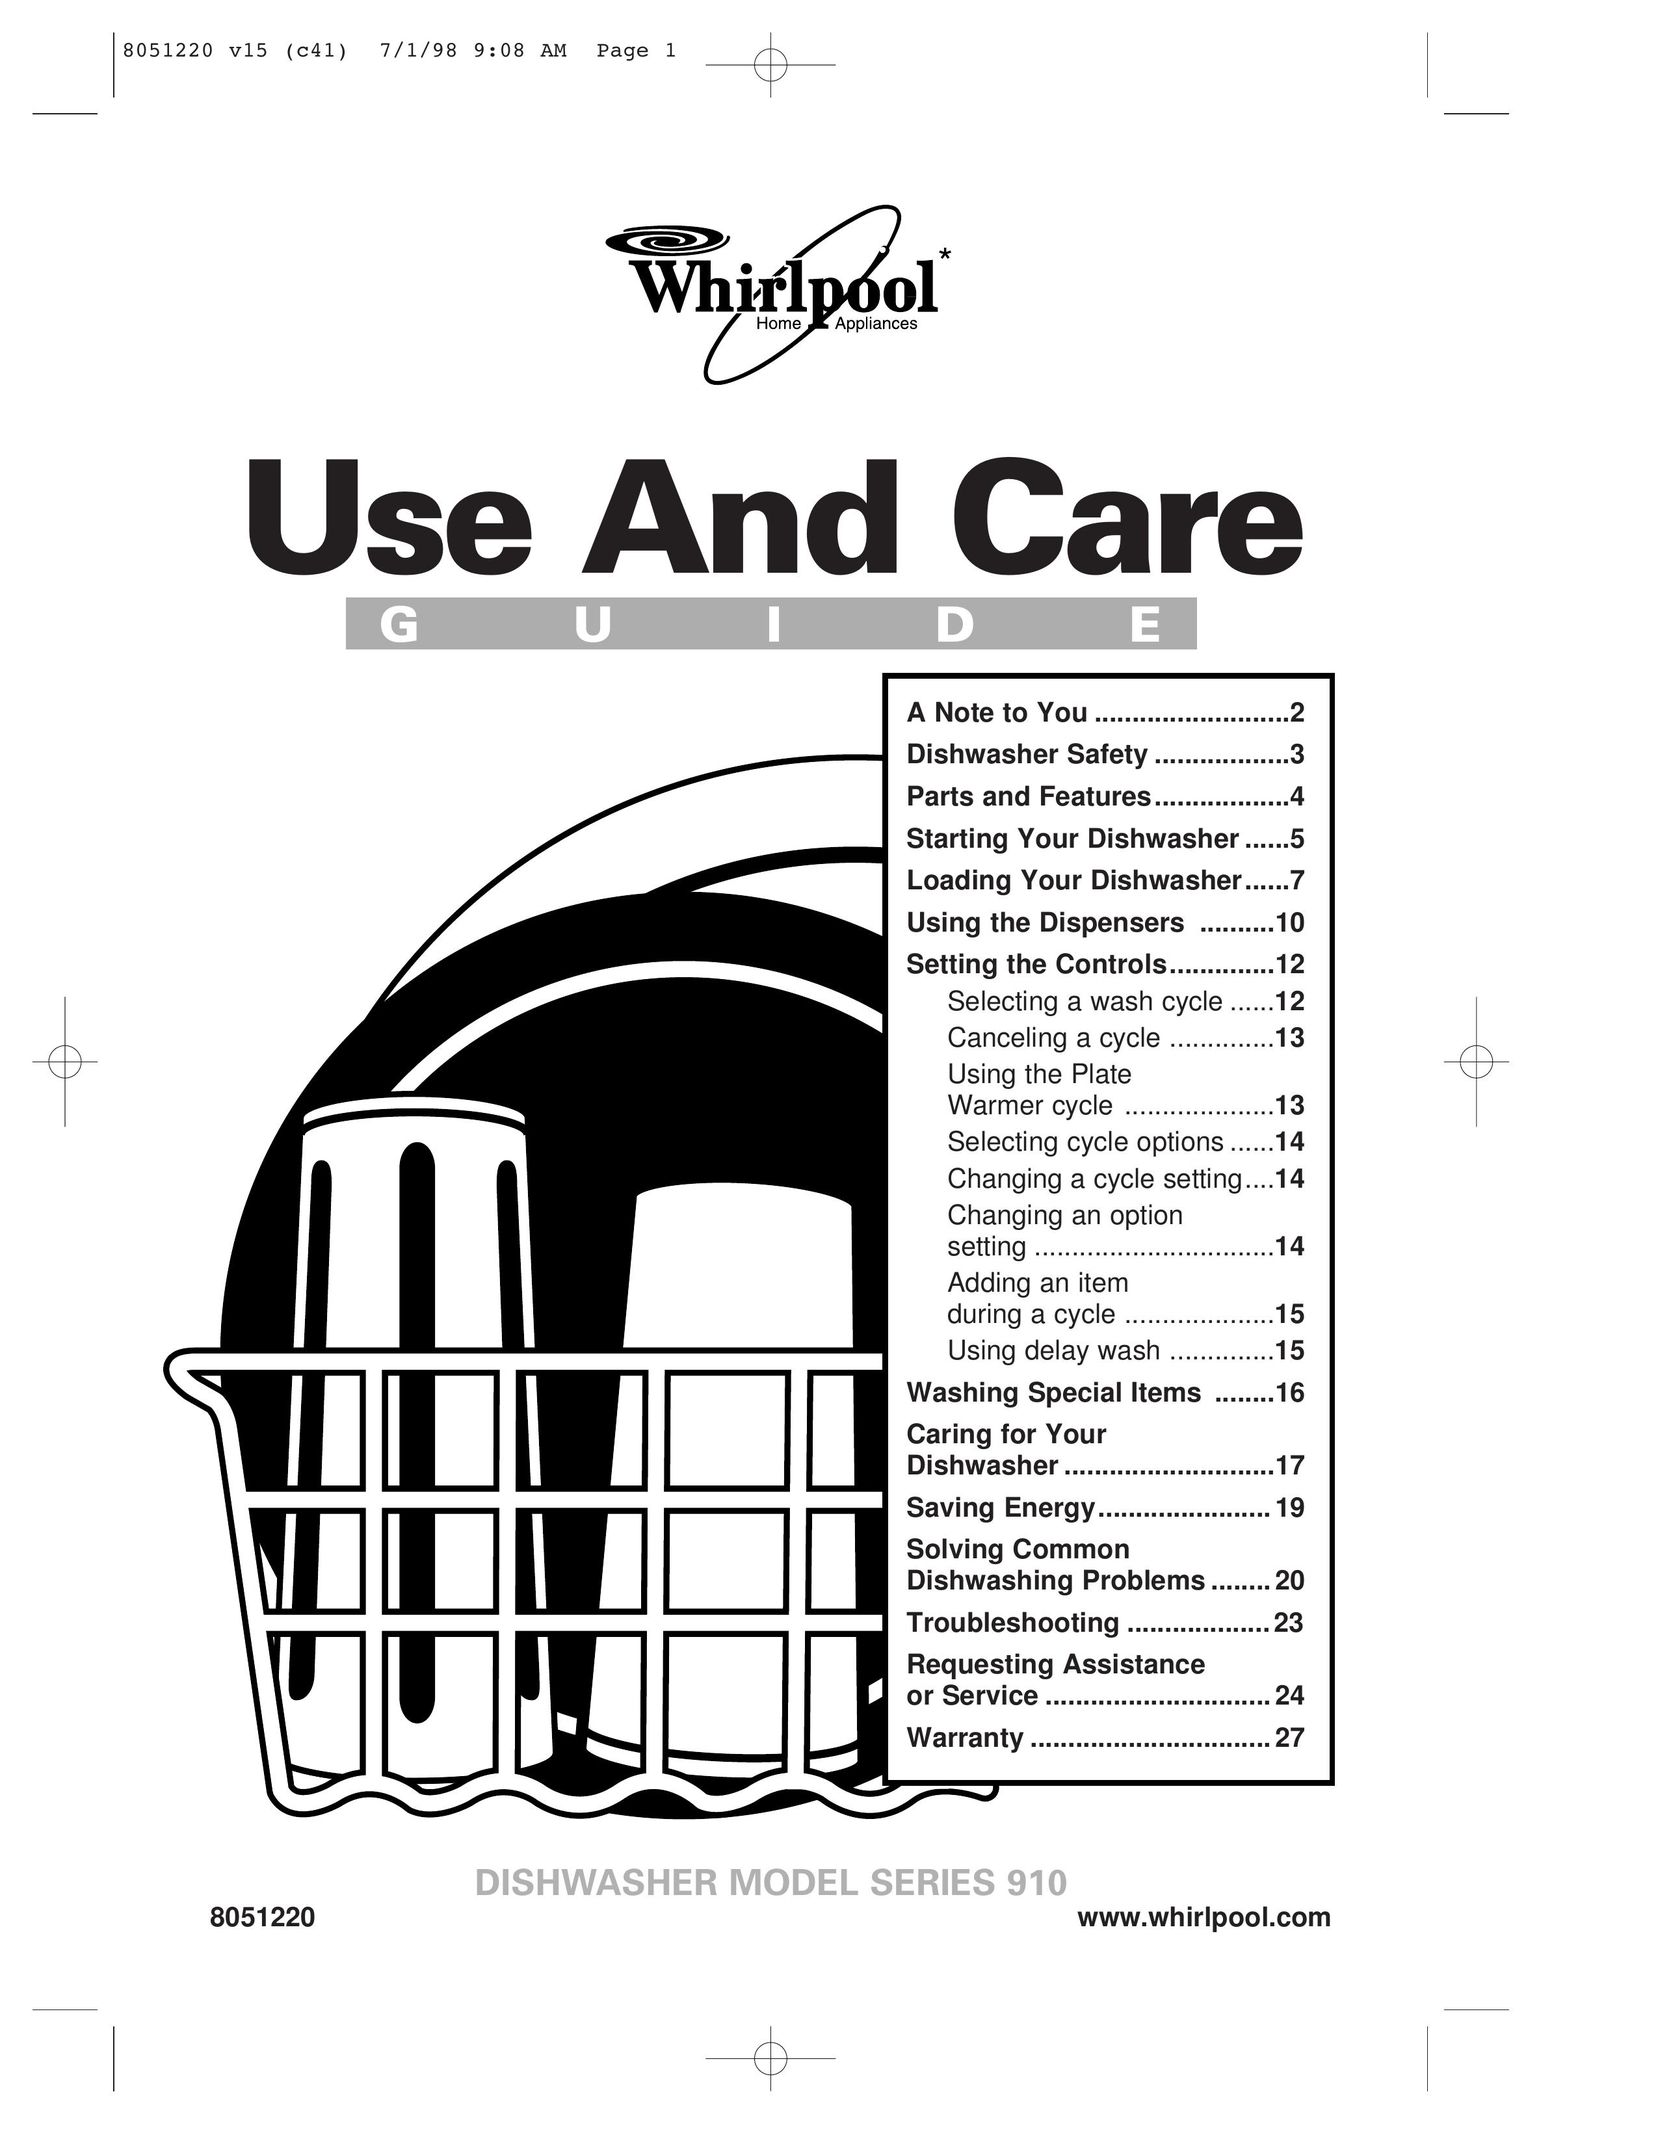 Whirlpool 910 Series Dishwasher User Manual